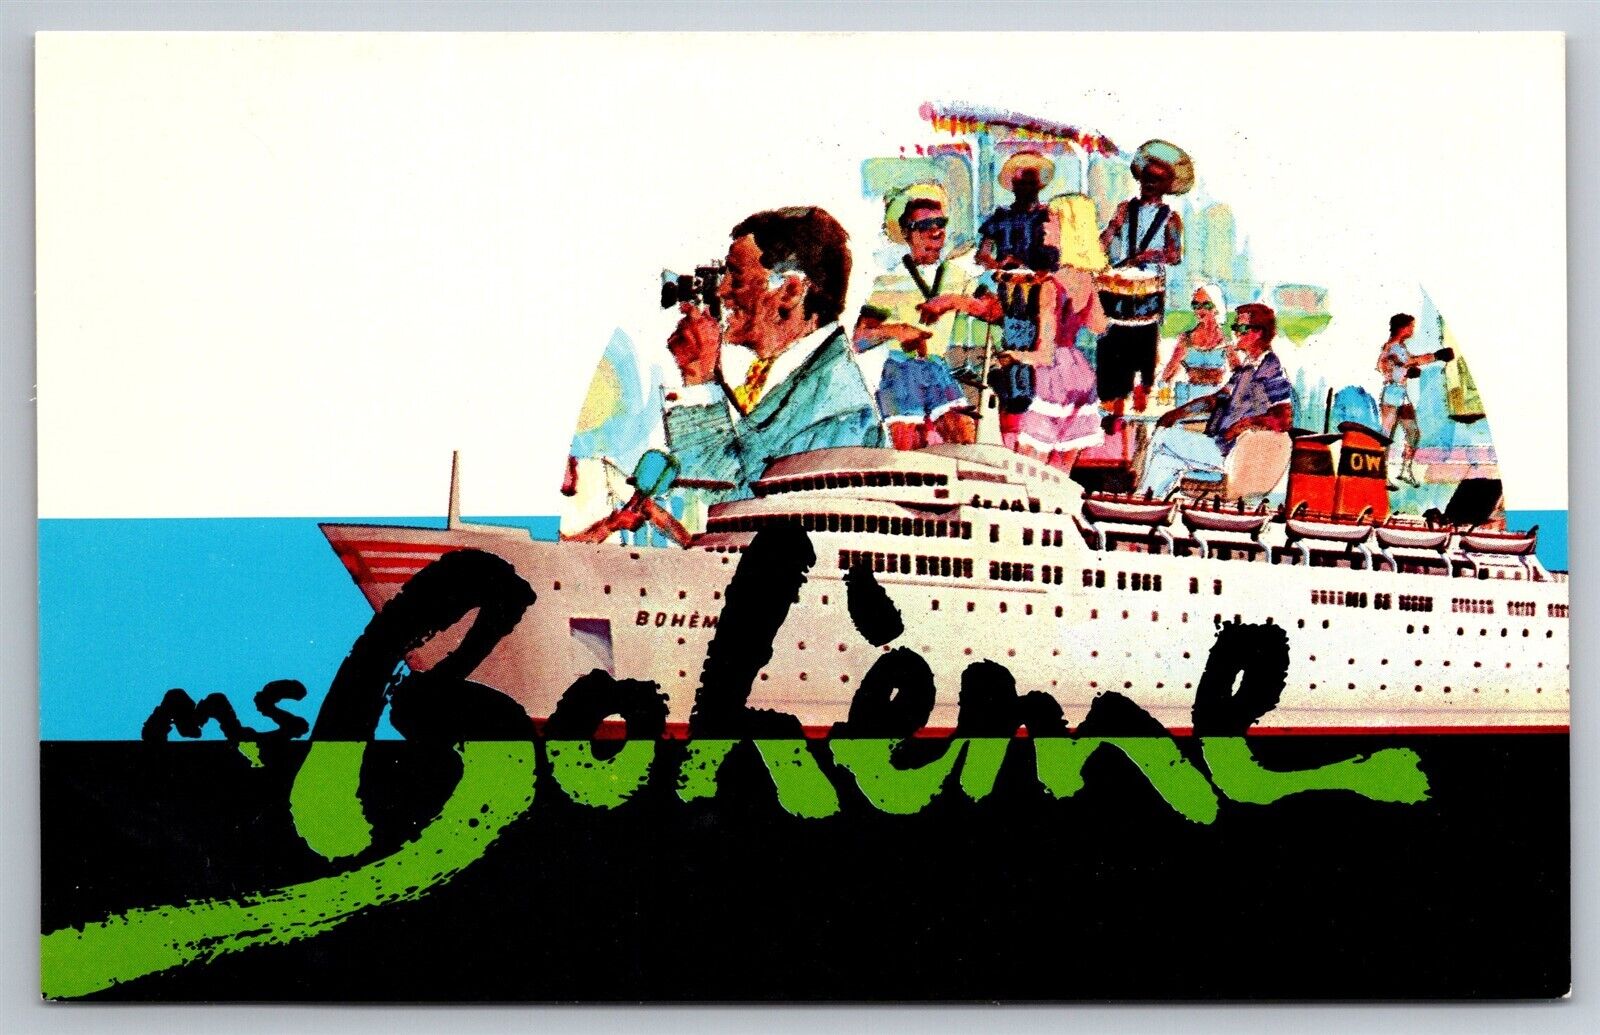 M/S Boheme Commodore Cruise Line Caribbean Cruises Miami FL C1939 Postcard G4